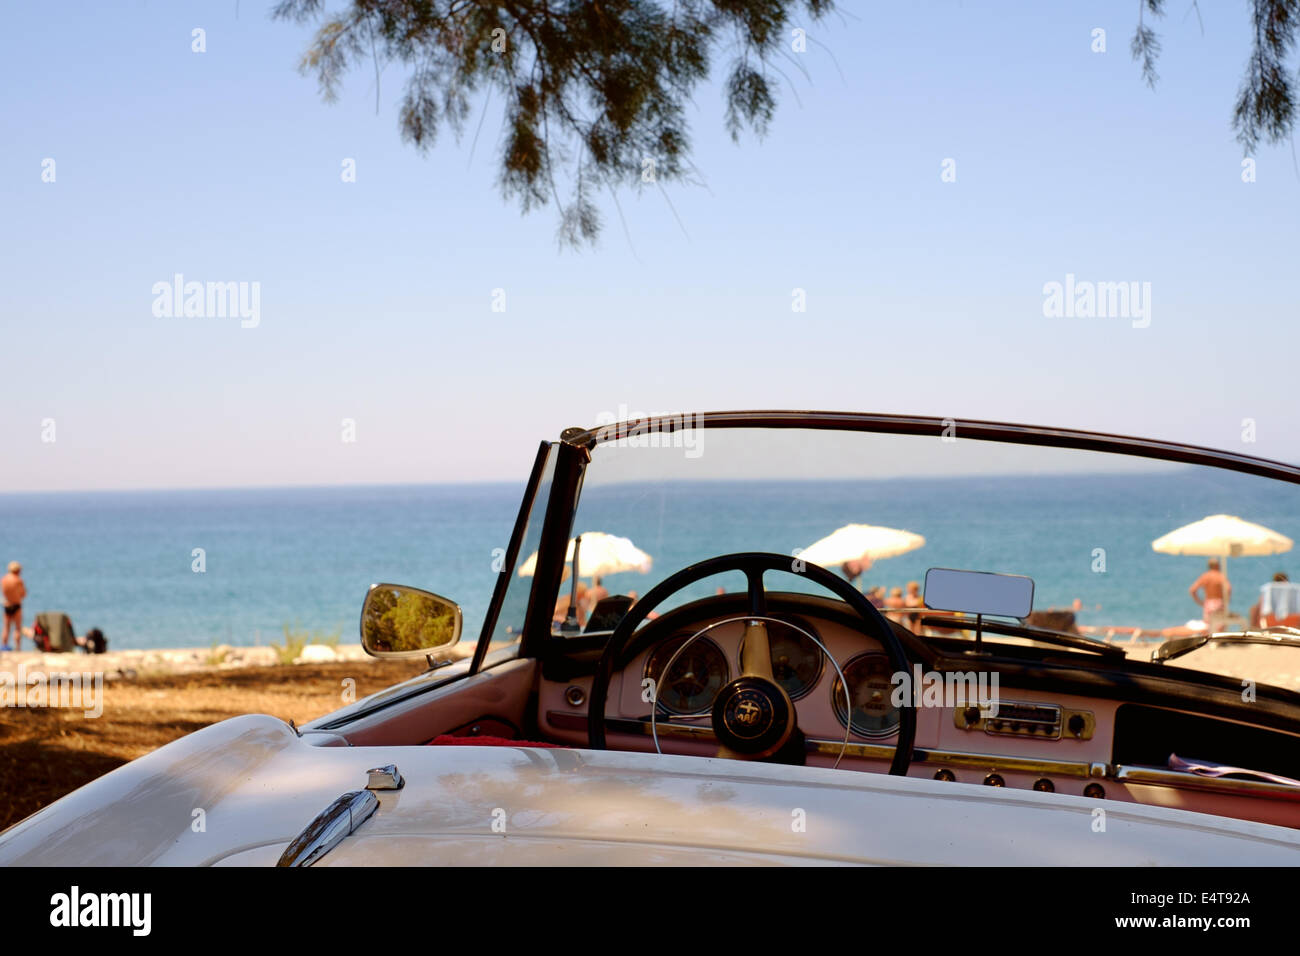 Classic convertible open top white Alfa Romeo sports car - parked at a beach - Mani Peninsula, Peloponnese, Greece Stock Photo